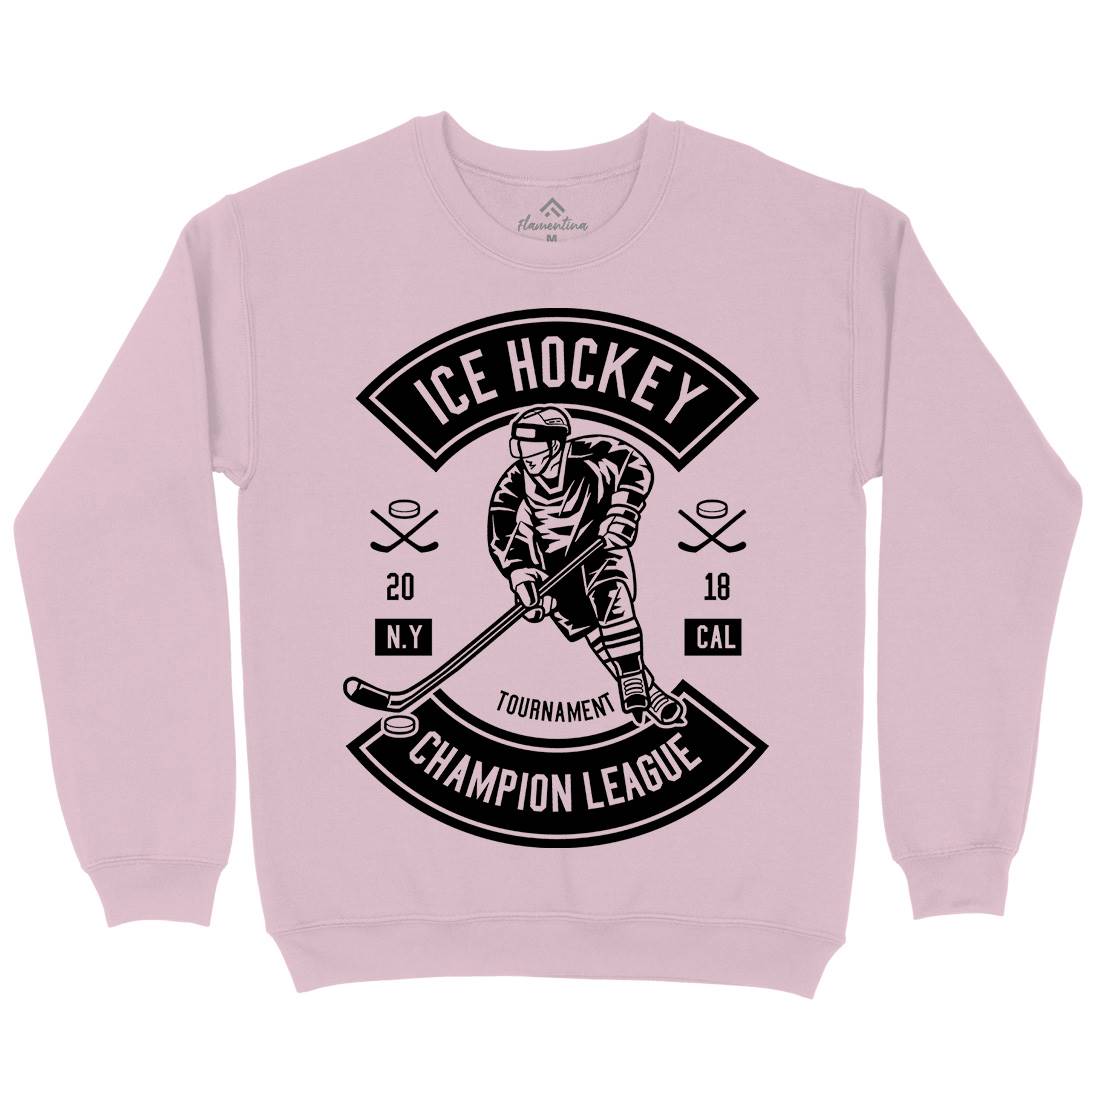 Ice Hockey Champion League Kids Crew Neck Sweatshirt Sport B564